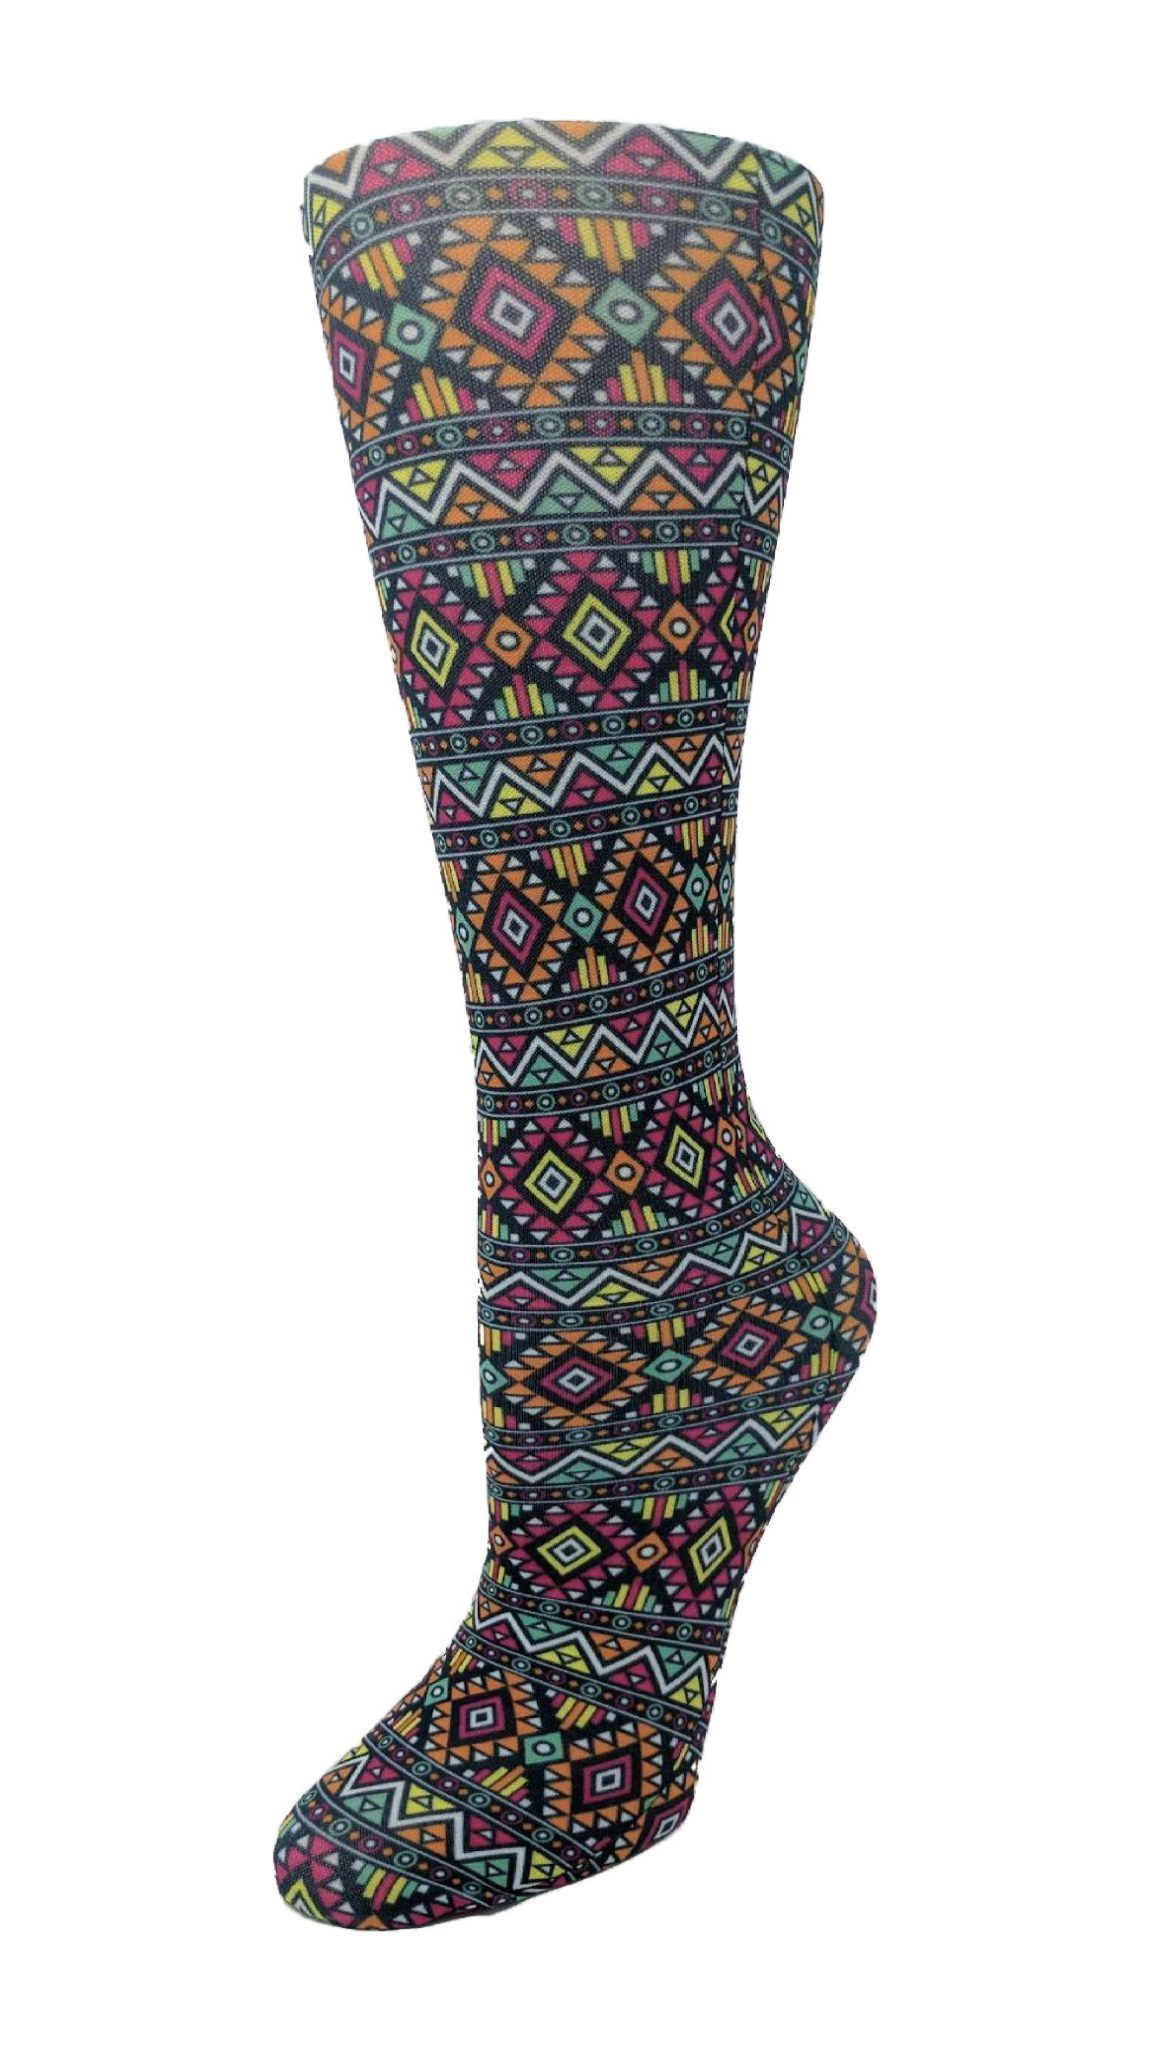 Cutieful Compression Socks Knit Wide Calf 10-18 Mmhg encequiconcerne Walmart Compression Stockings 